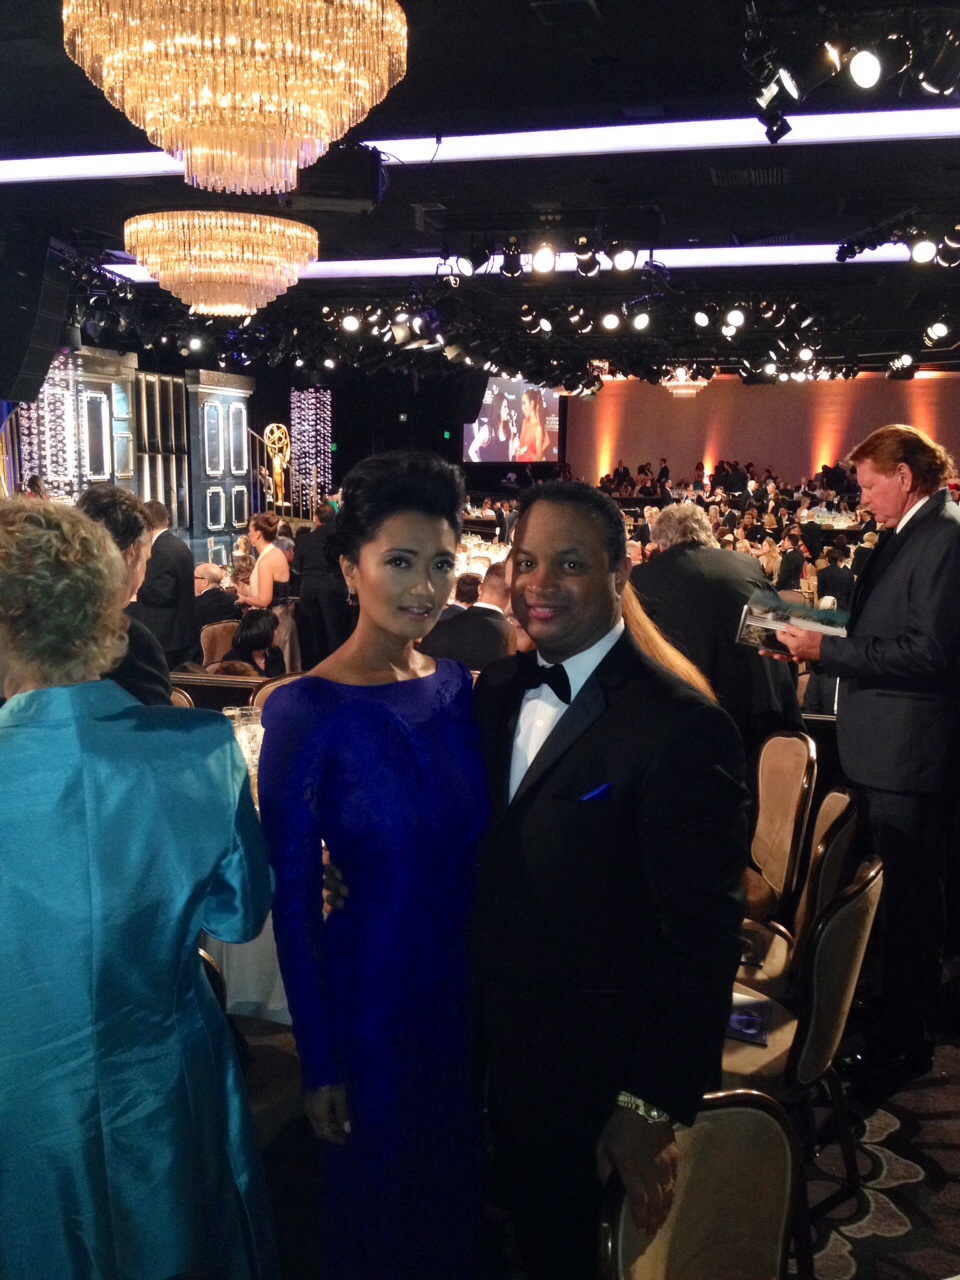 Primetime Emmy Awards 2014